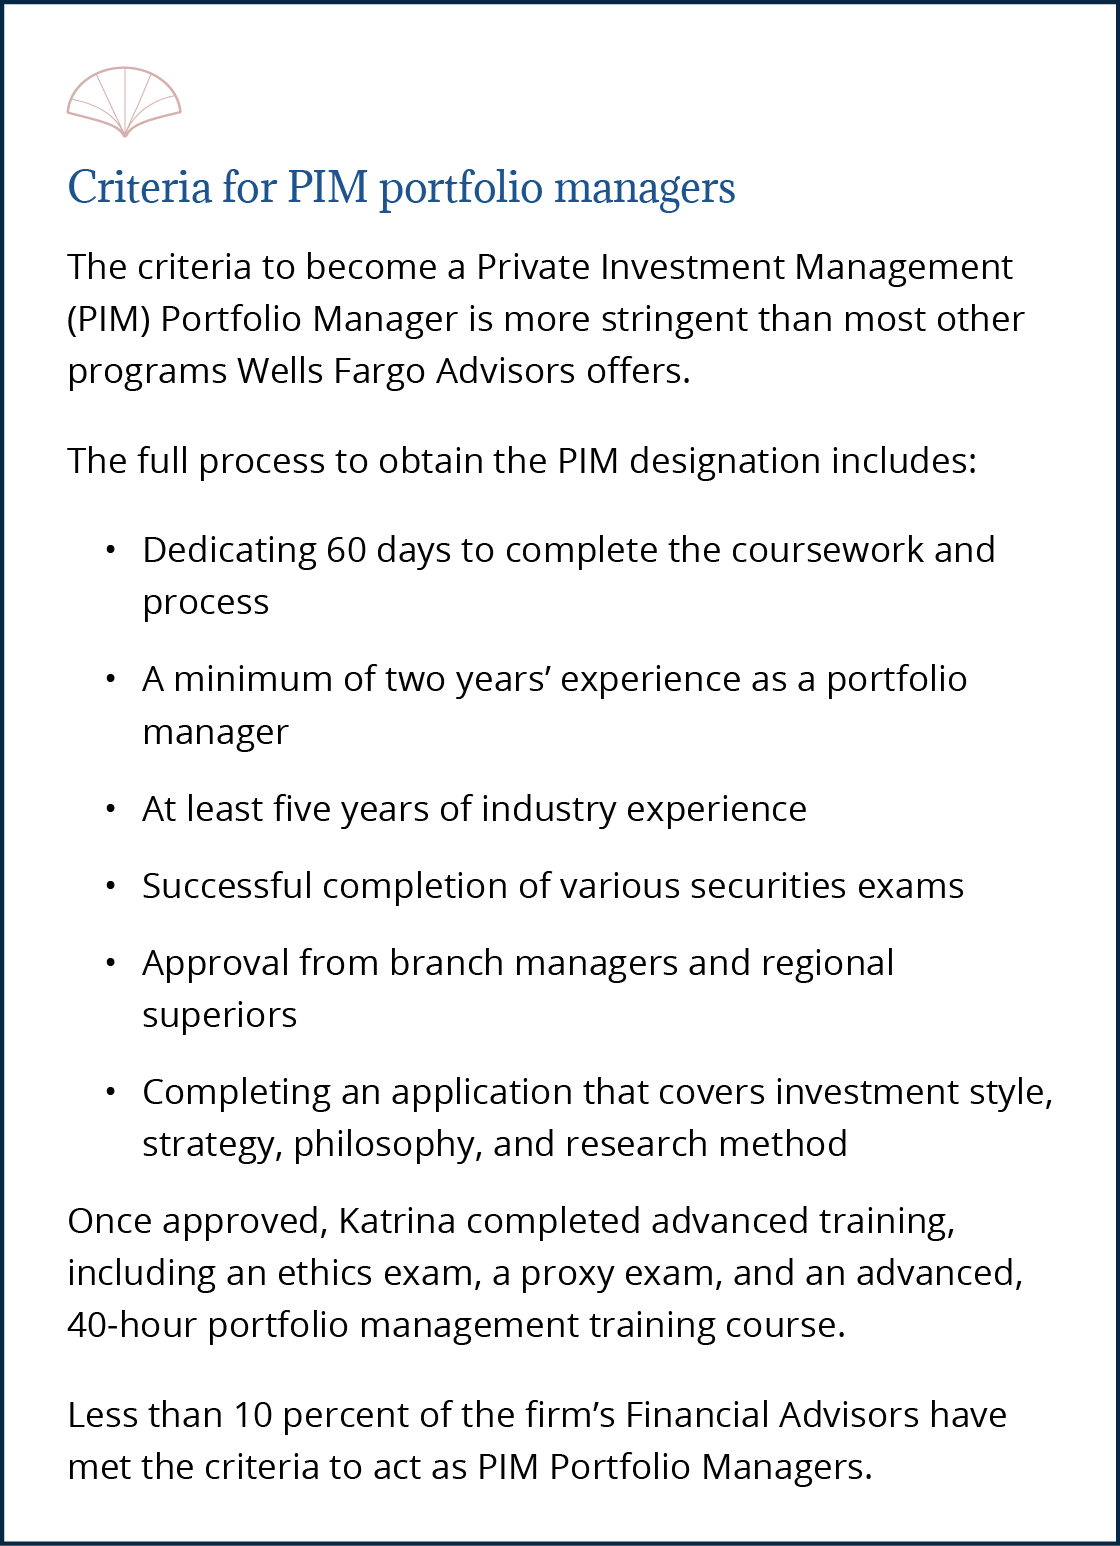 Criteria for PIM portfolio managers.png